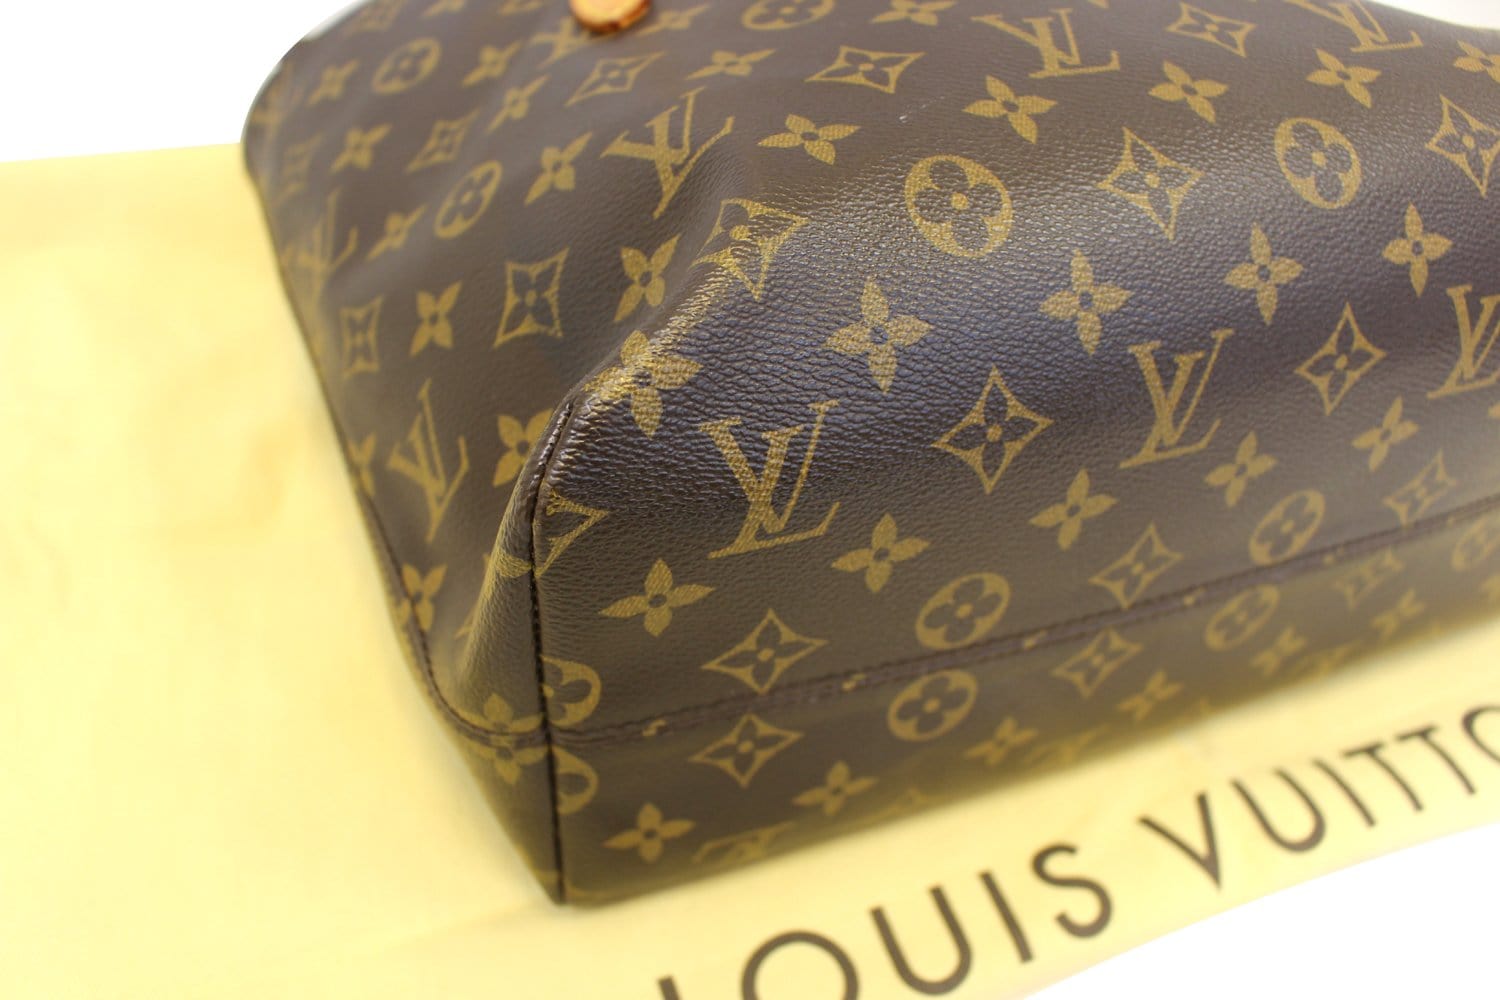 3ab0985] Auth Louis Vuitton Tote Bag Monogram Raspail PM M40608